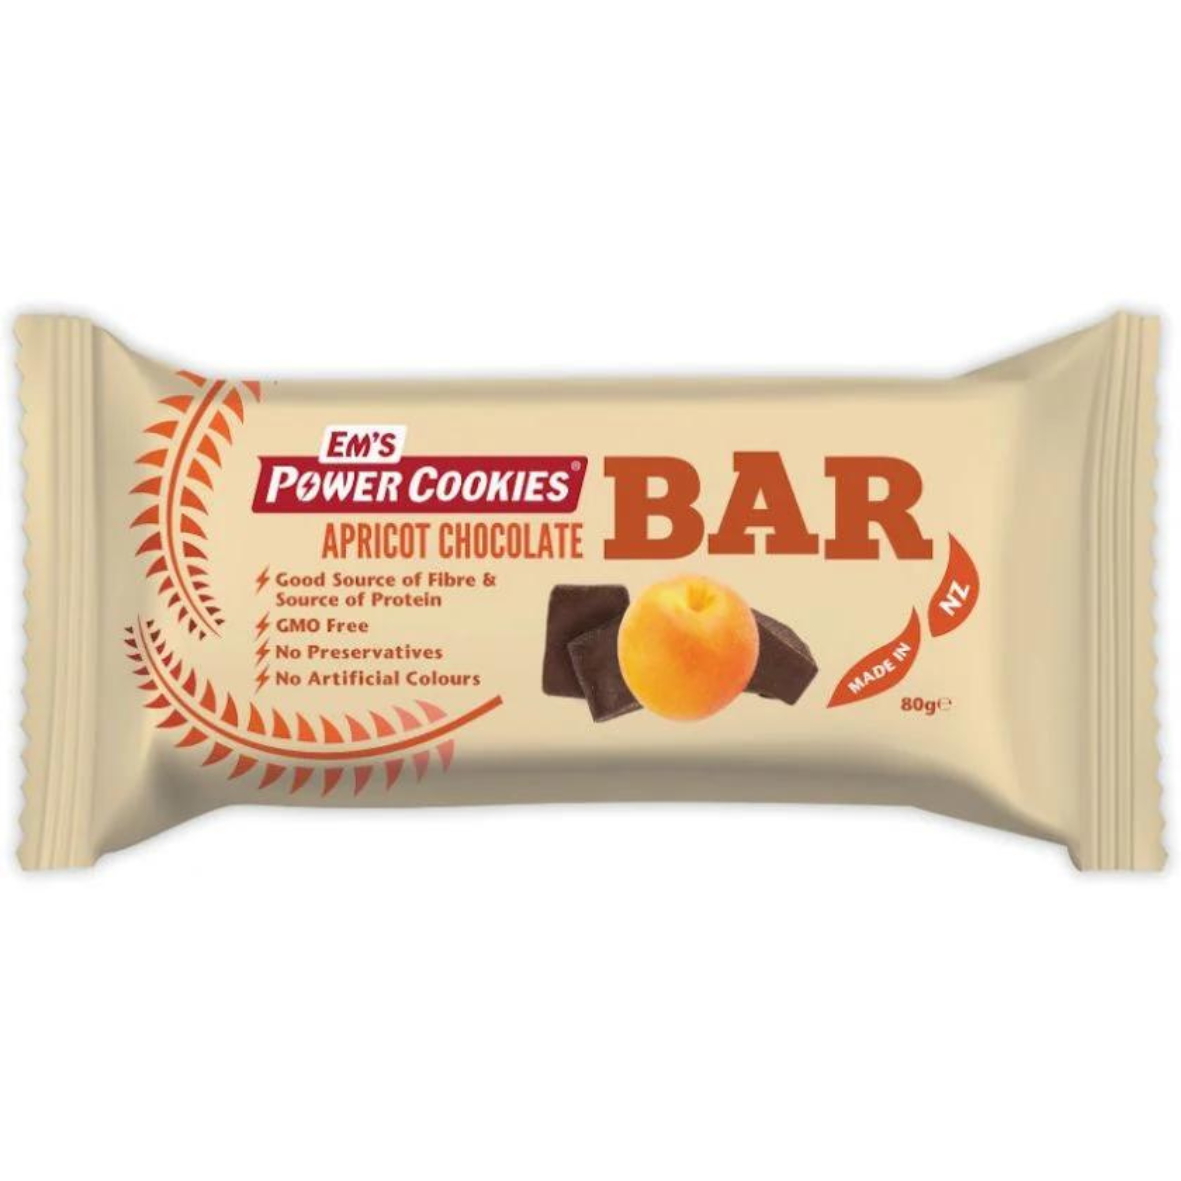 Em's Power Cookies - Energy Bars - Apricot Chocolate 80g